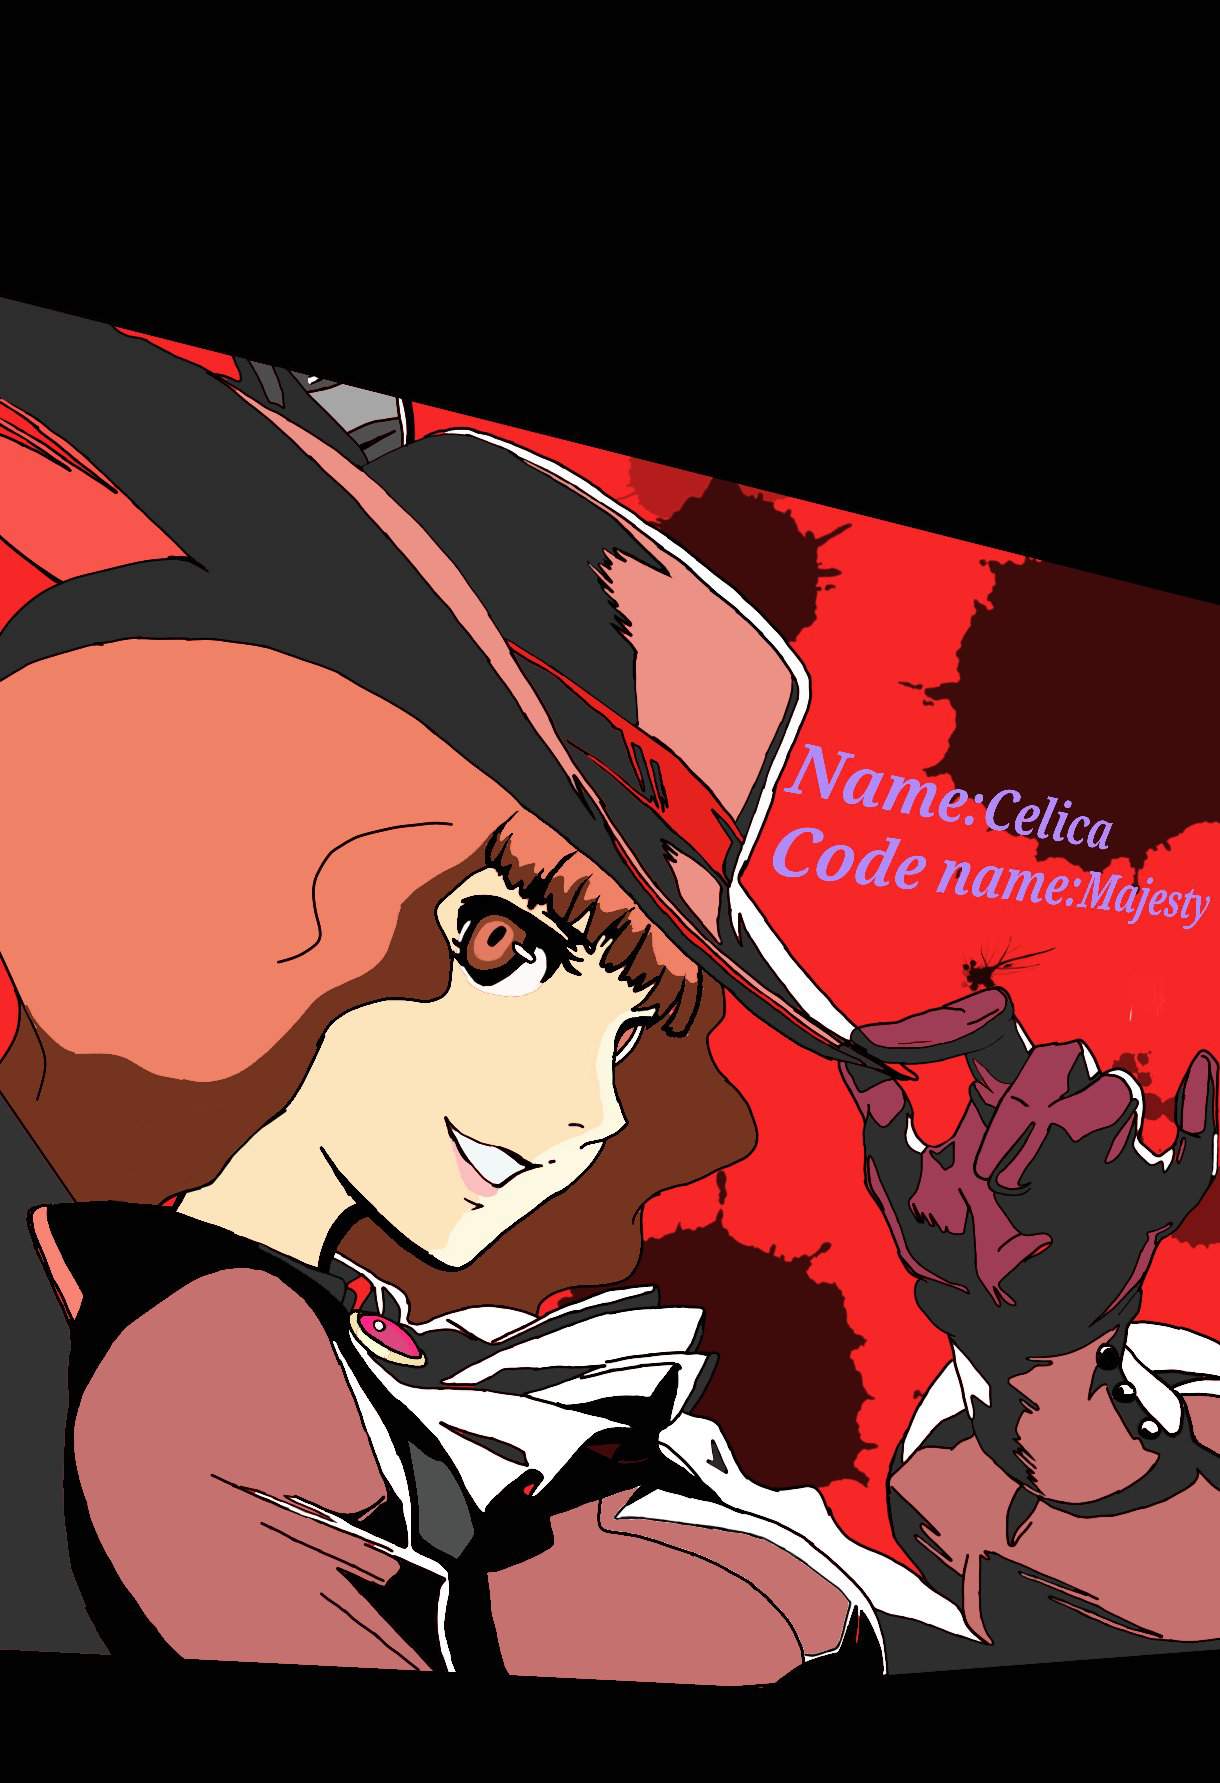 Emblem Thieves [Fire emblem x Persona 5] Celica/Majesty | Fire Emblem Amino